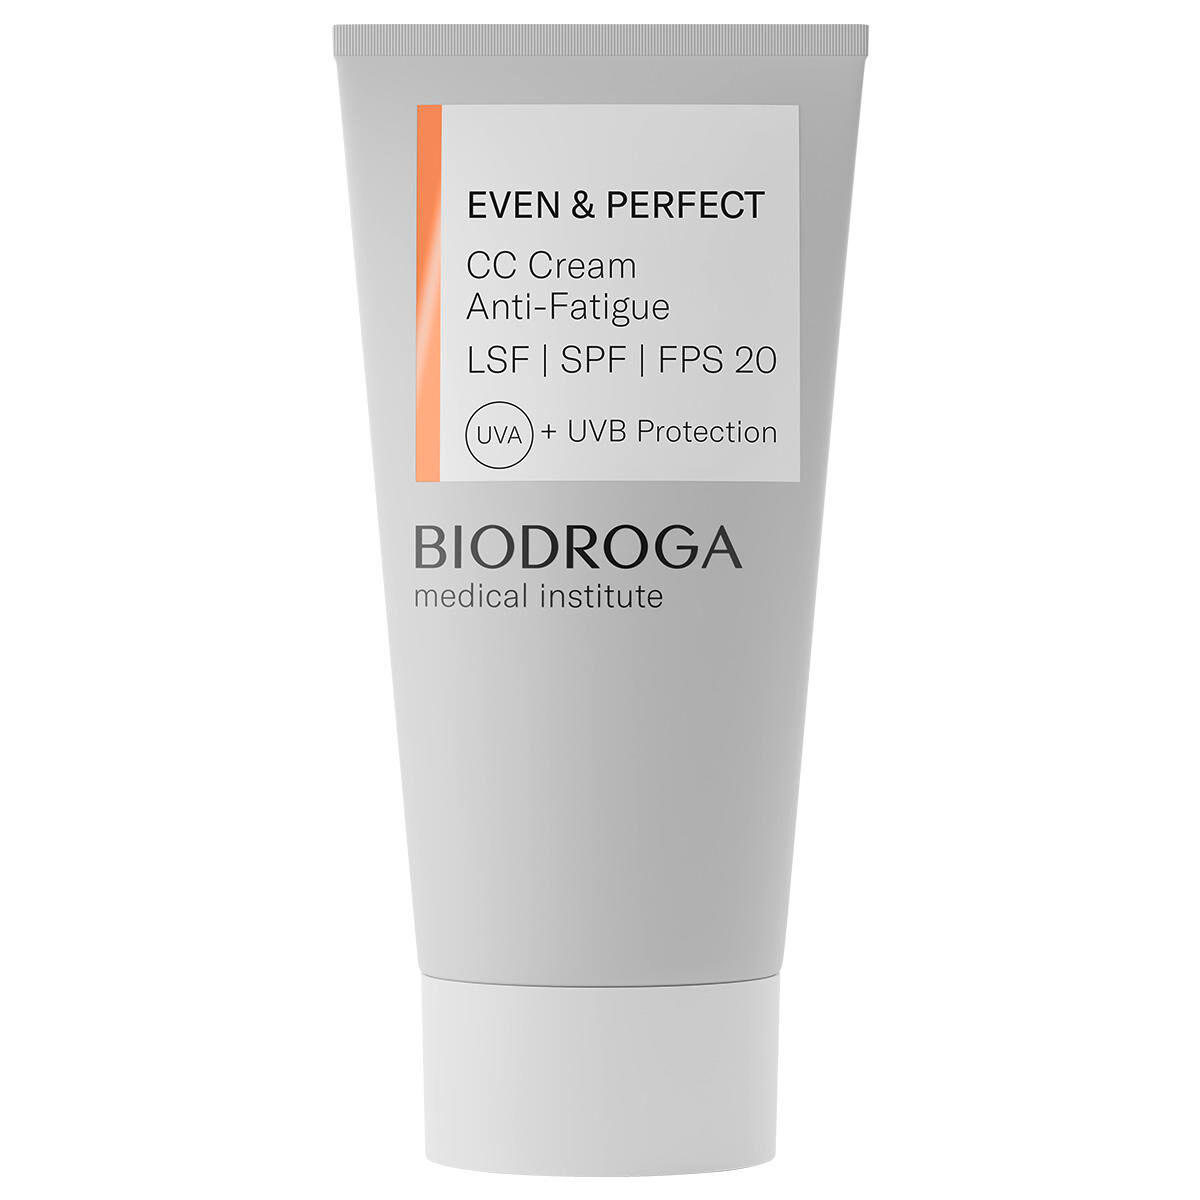 BIODROGA Medical Institute EVEN & PERFECT CC Cream Anti Fatigue SPF 20 30 ml